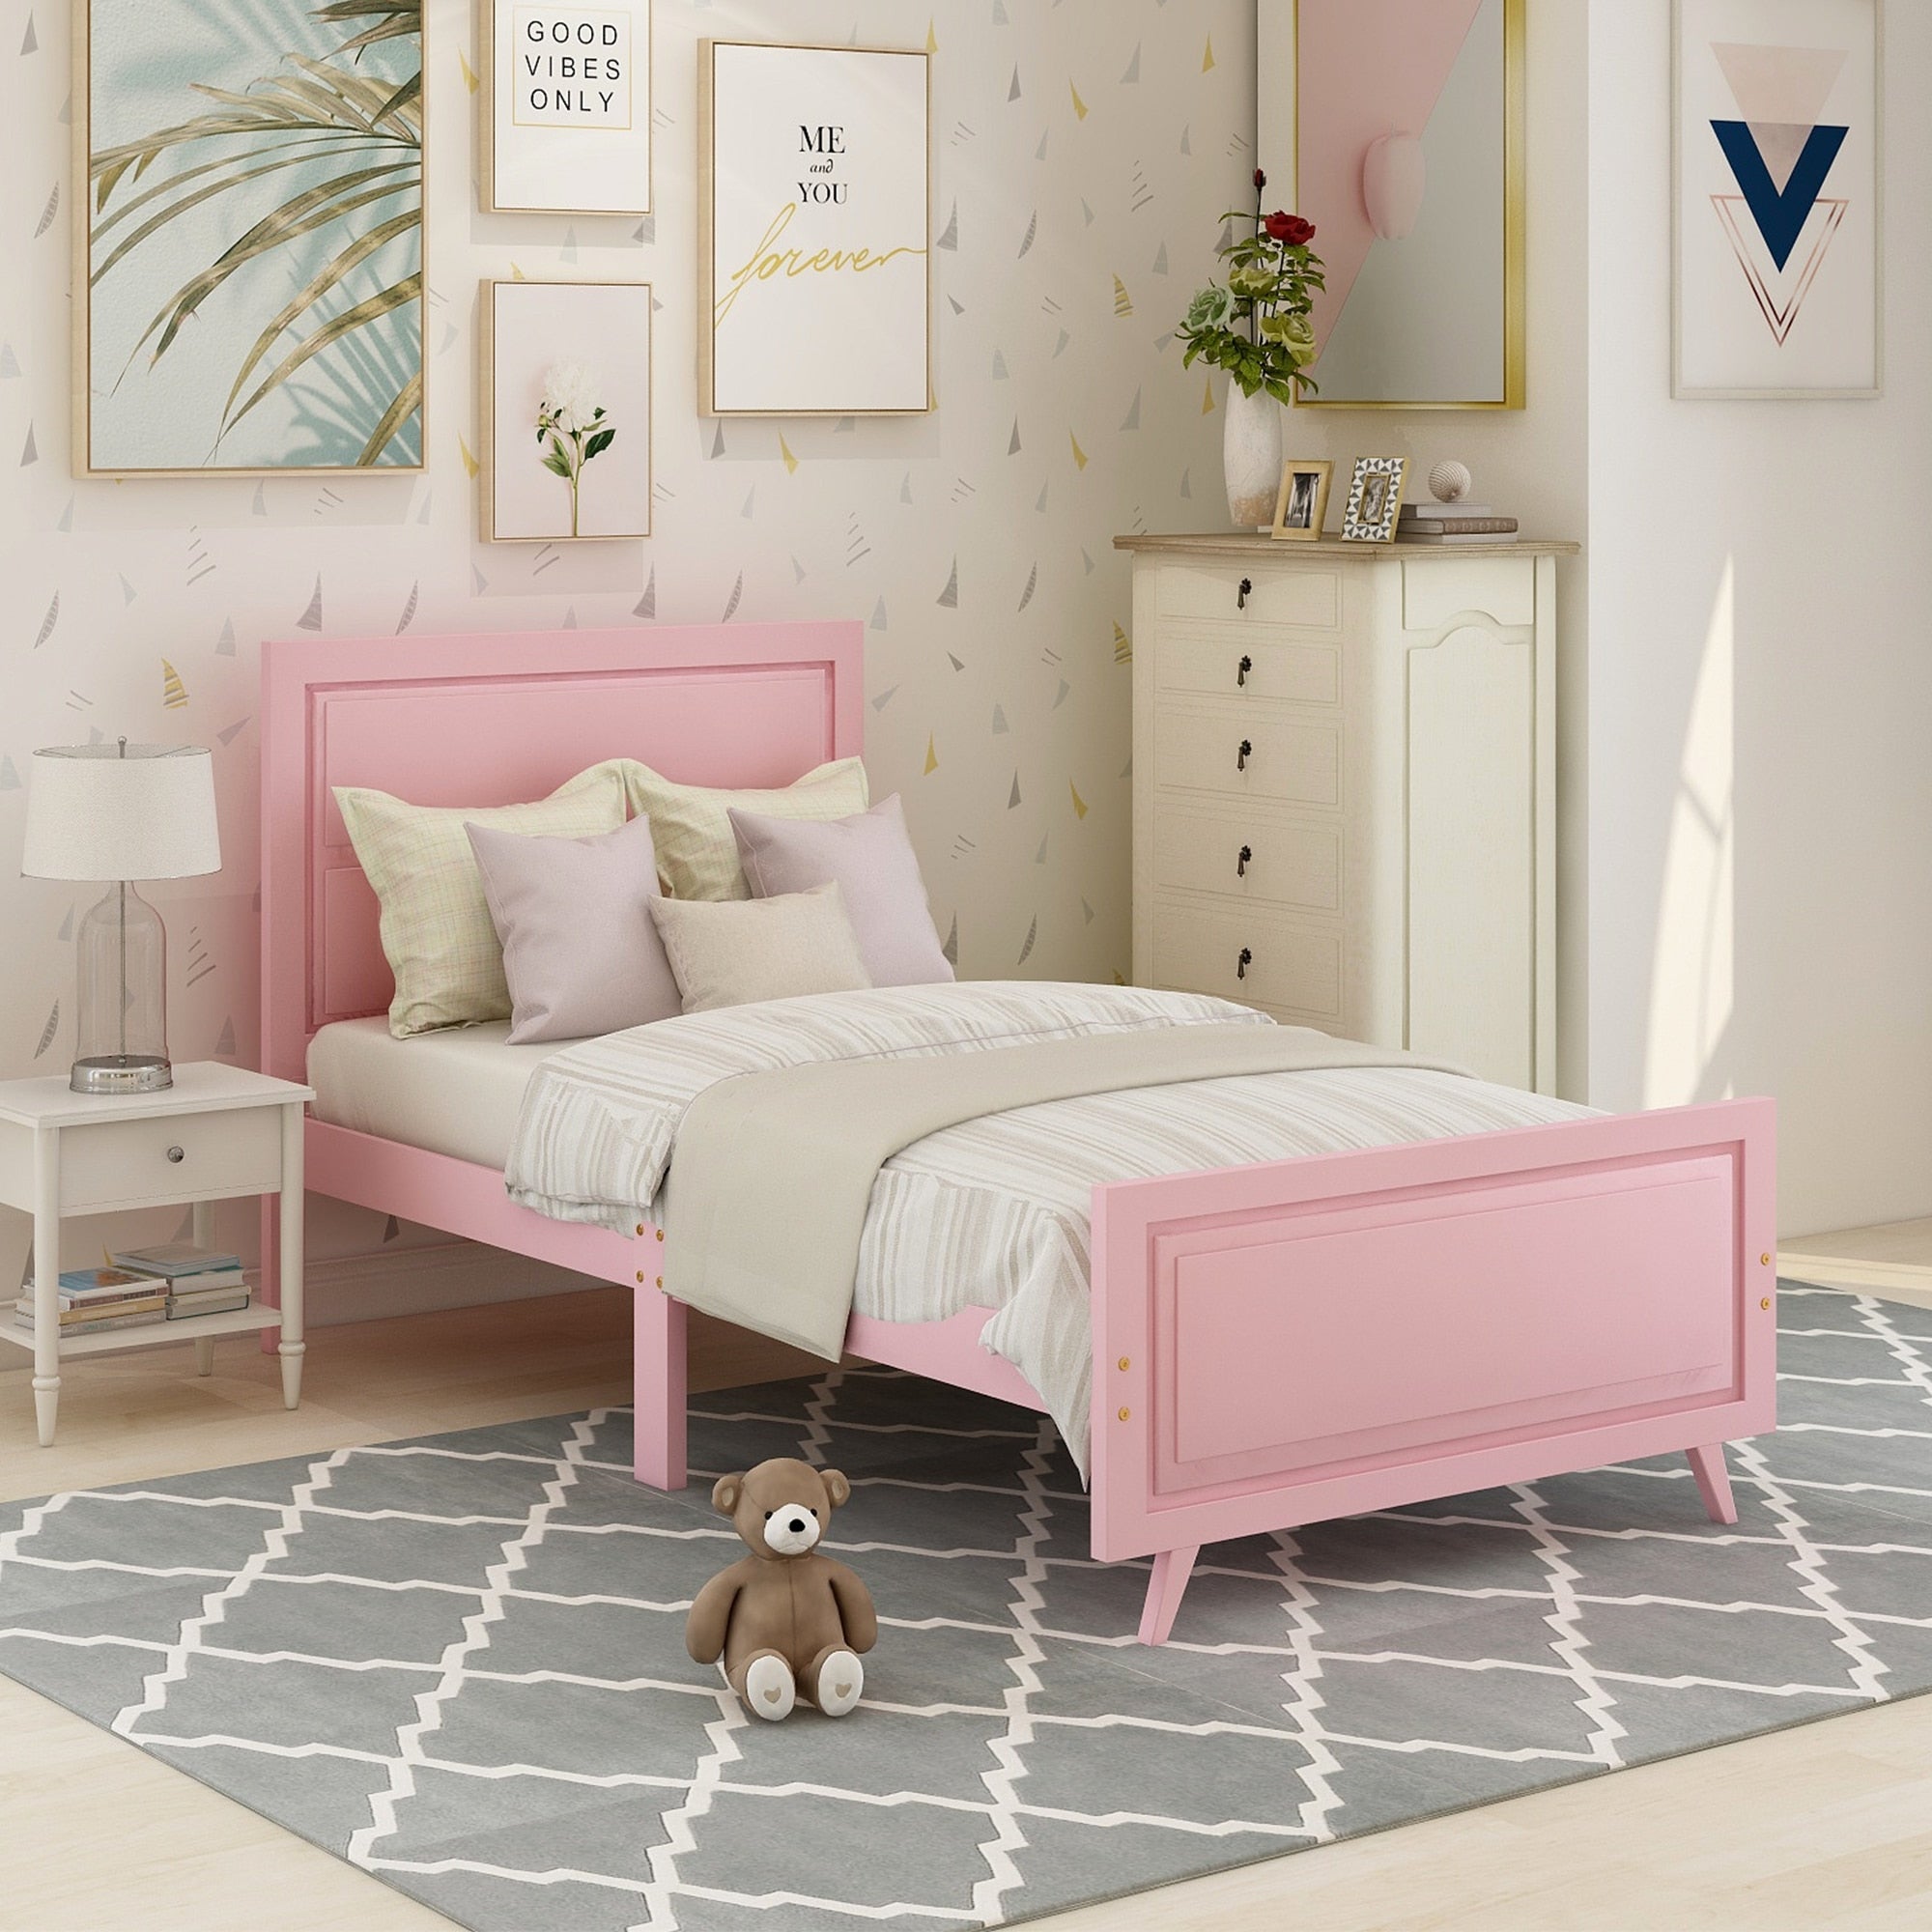 Pink Bed Frame Bedroom Furniture Wood Platform Bed With Headboard Home Furniture Ship From USA Warehouse Modern Bed Frame